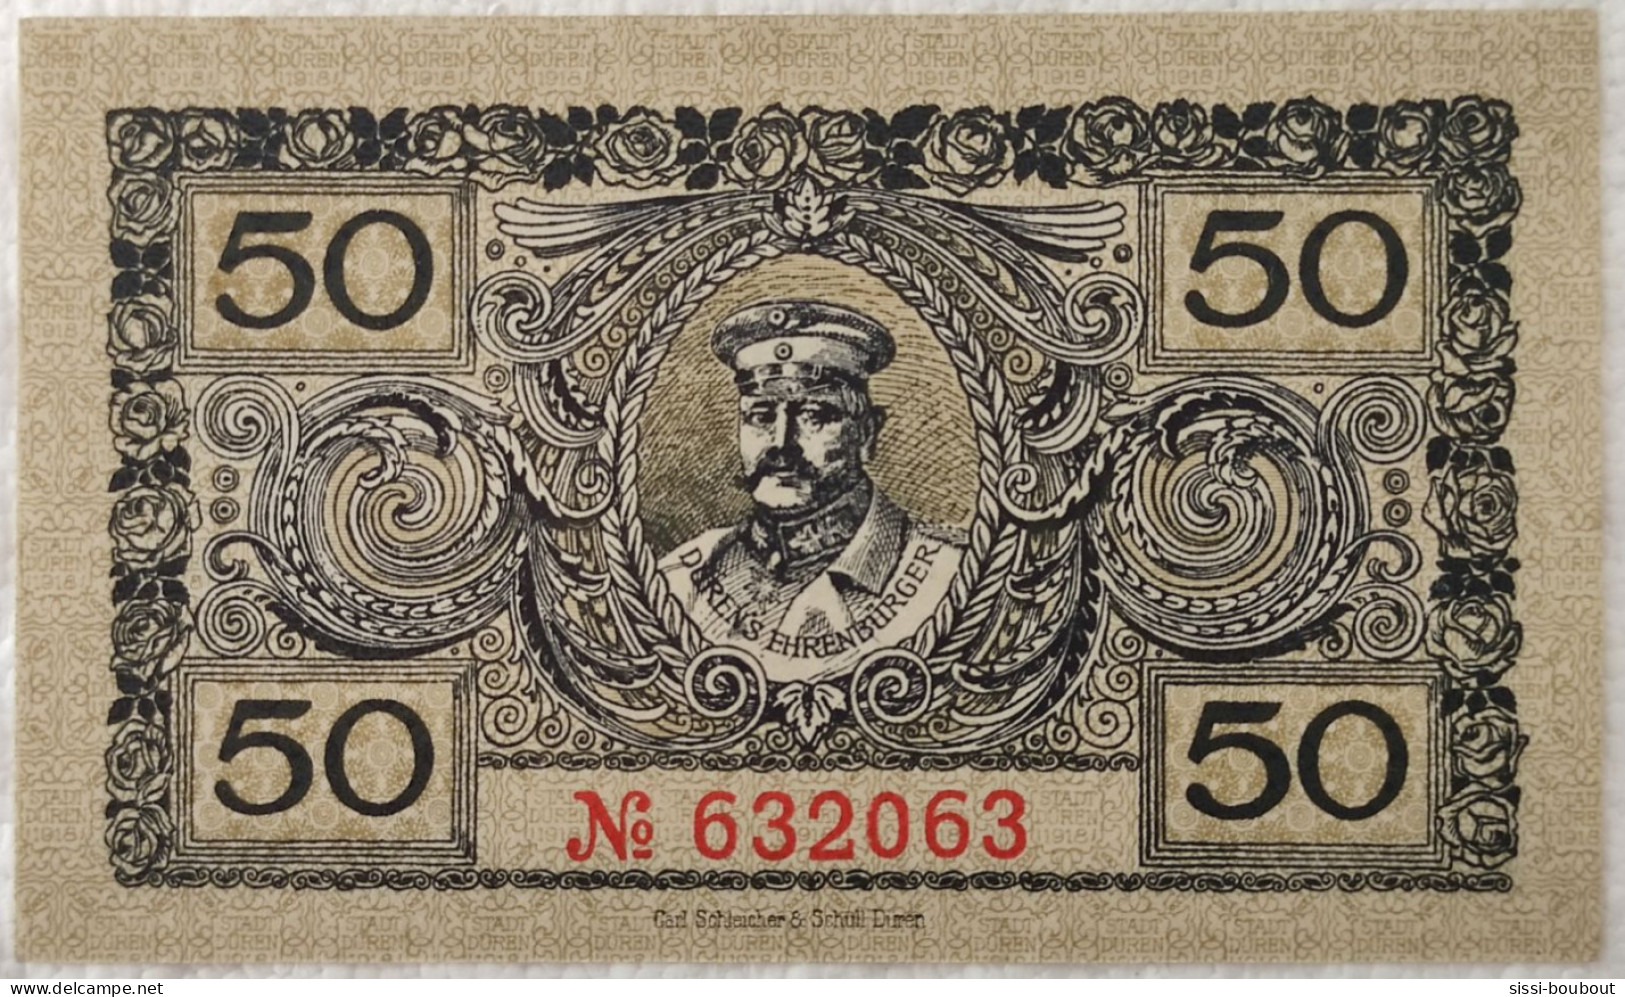 Billet Monnaie De Nécéssitée- Allemagne / Stadt Duren / 1918 / 50 Pfennig / Neuf - Monetary/Of Necessity